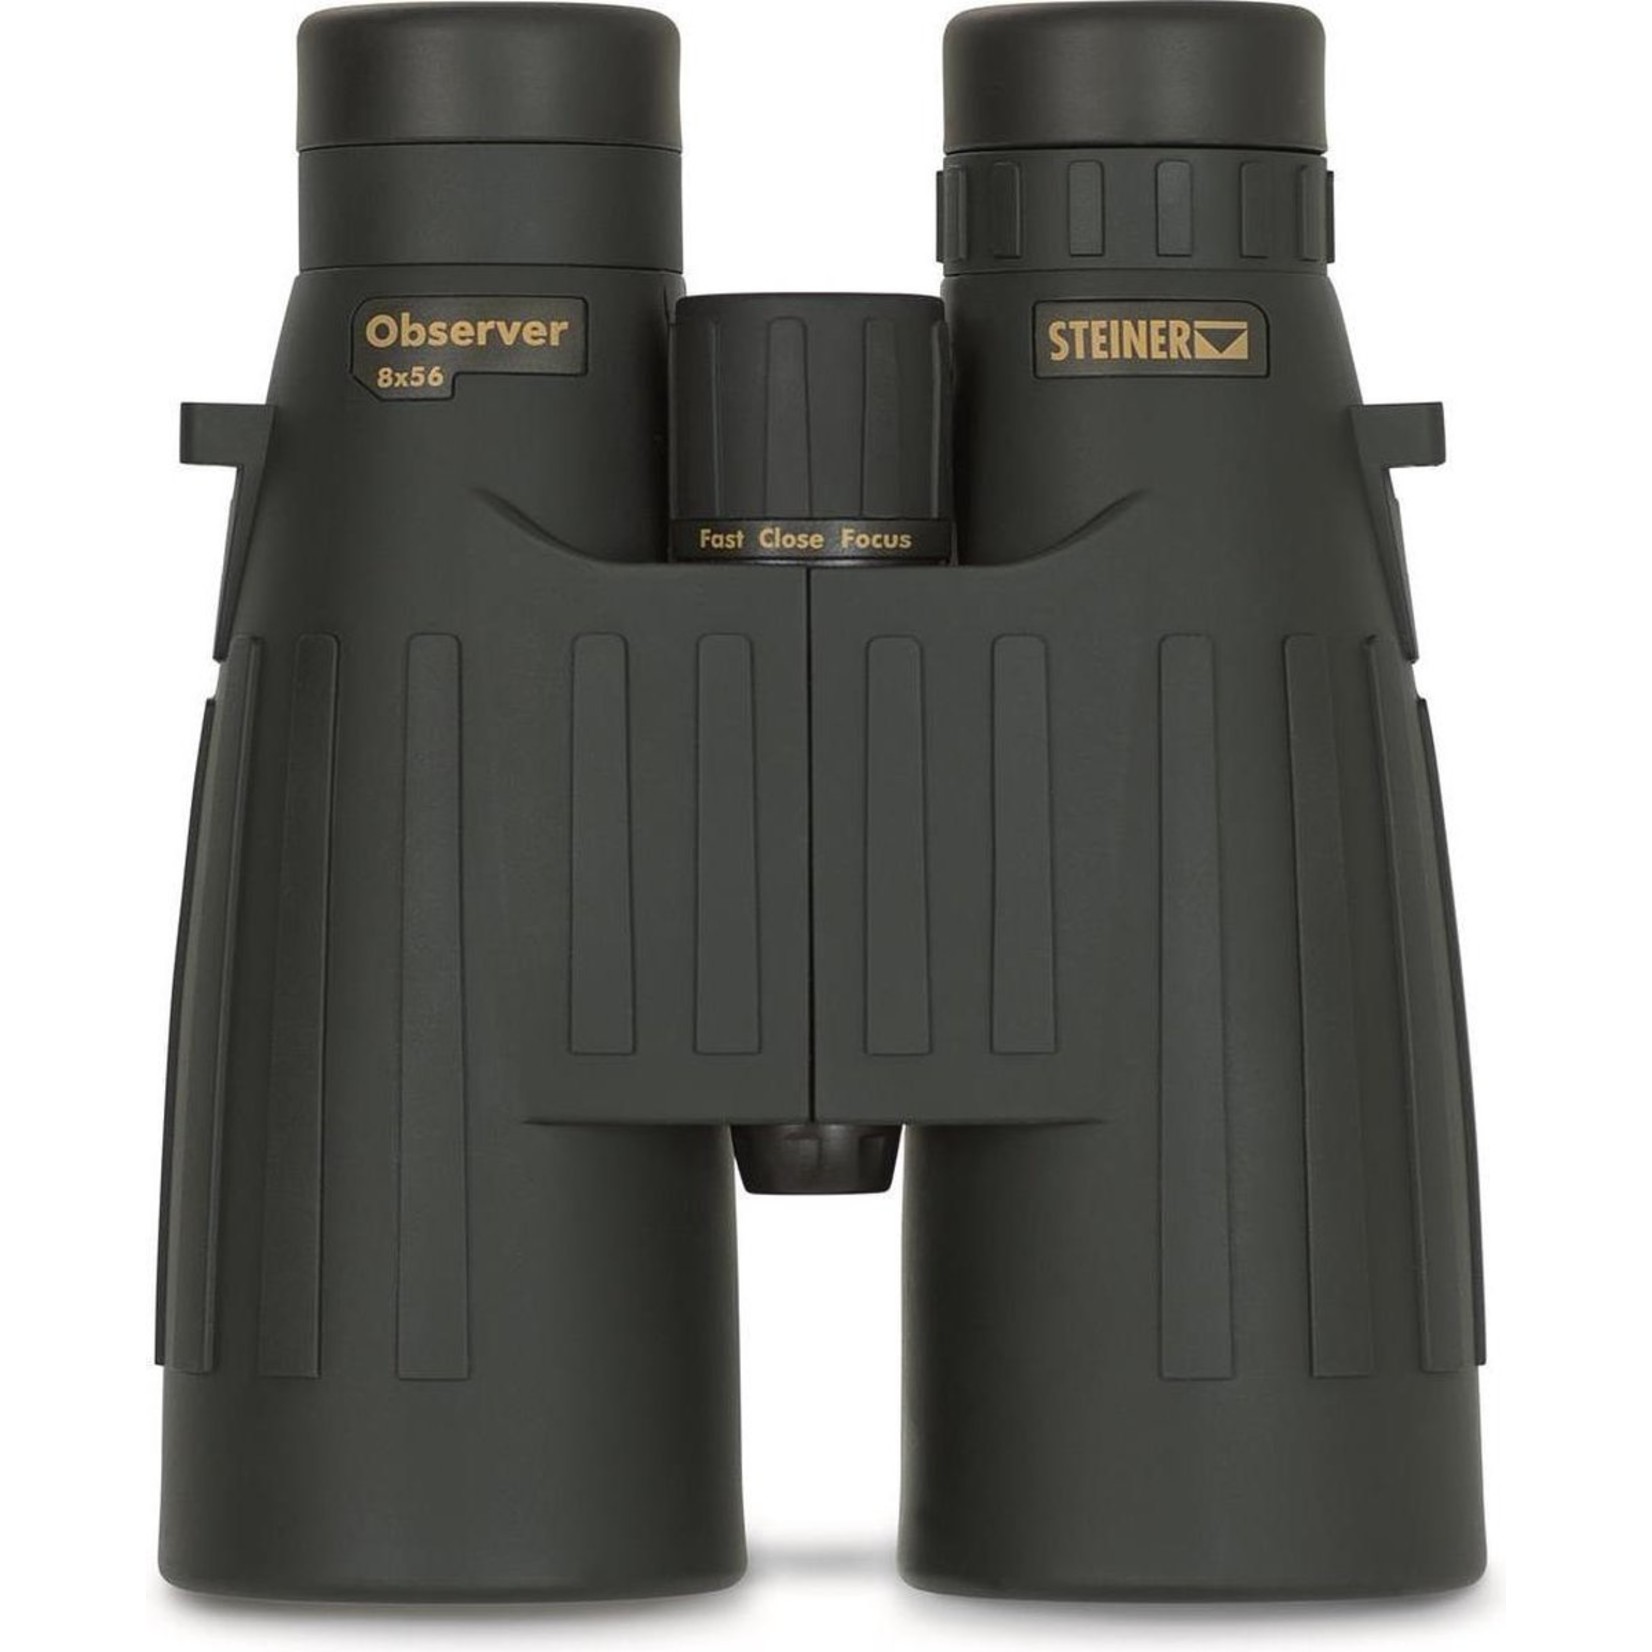 Steiner Steiner Observer 8x56 - Binoculars - Makrolon housing - Green